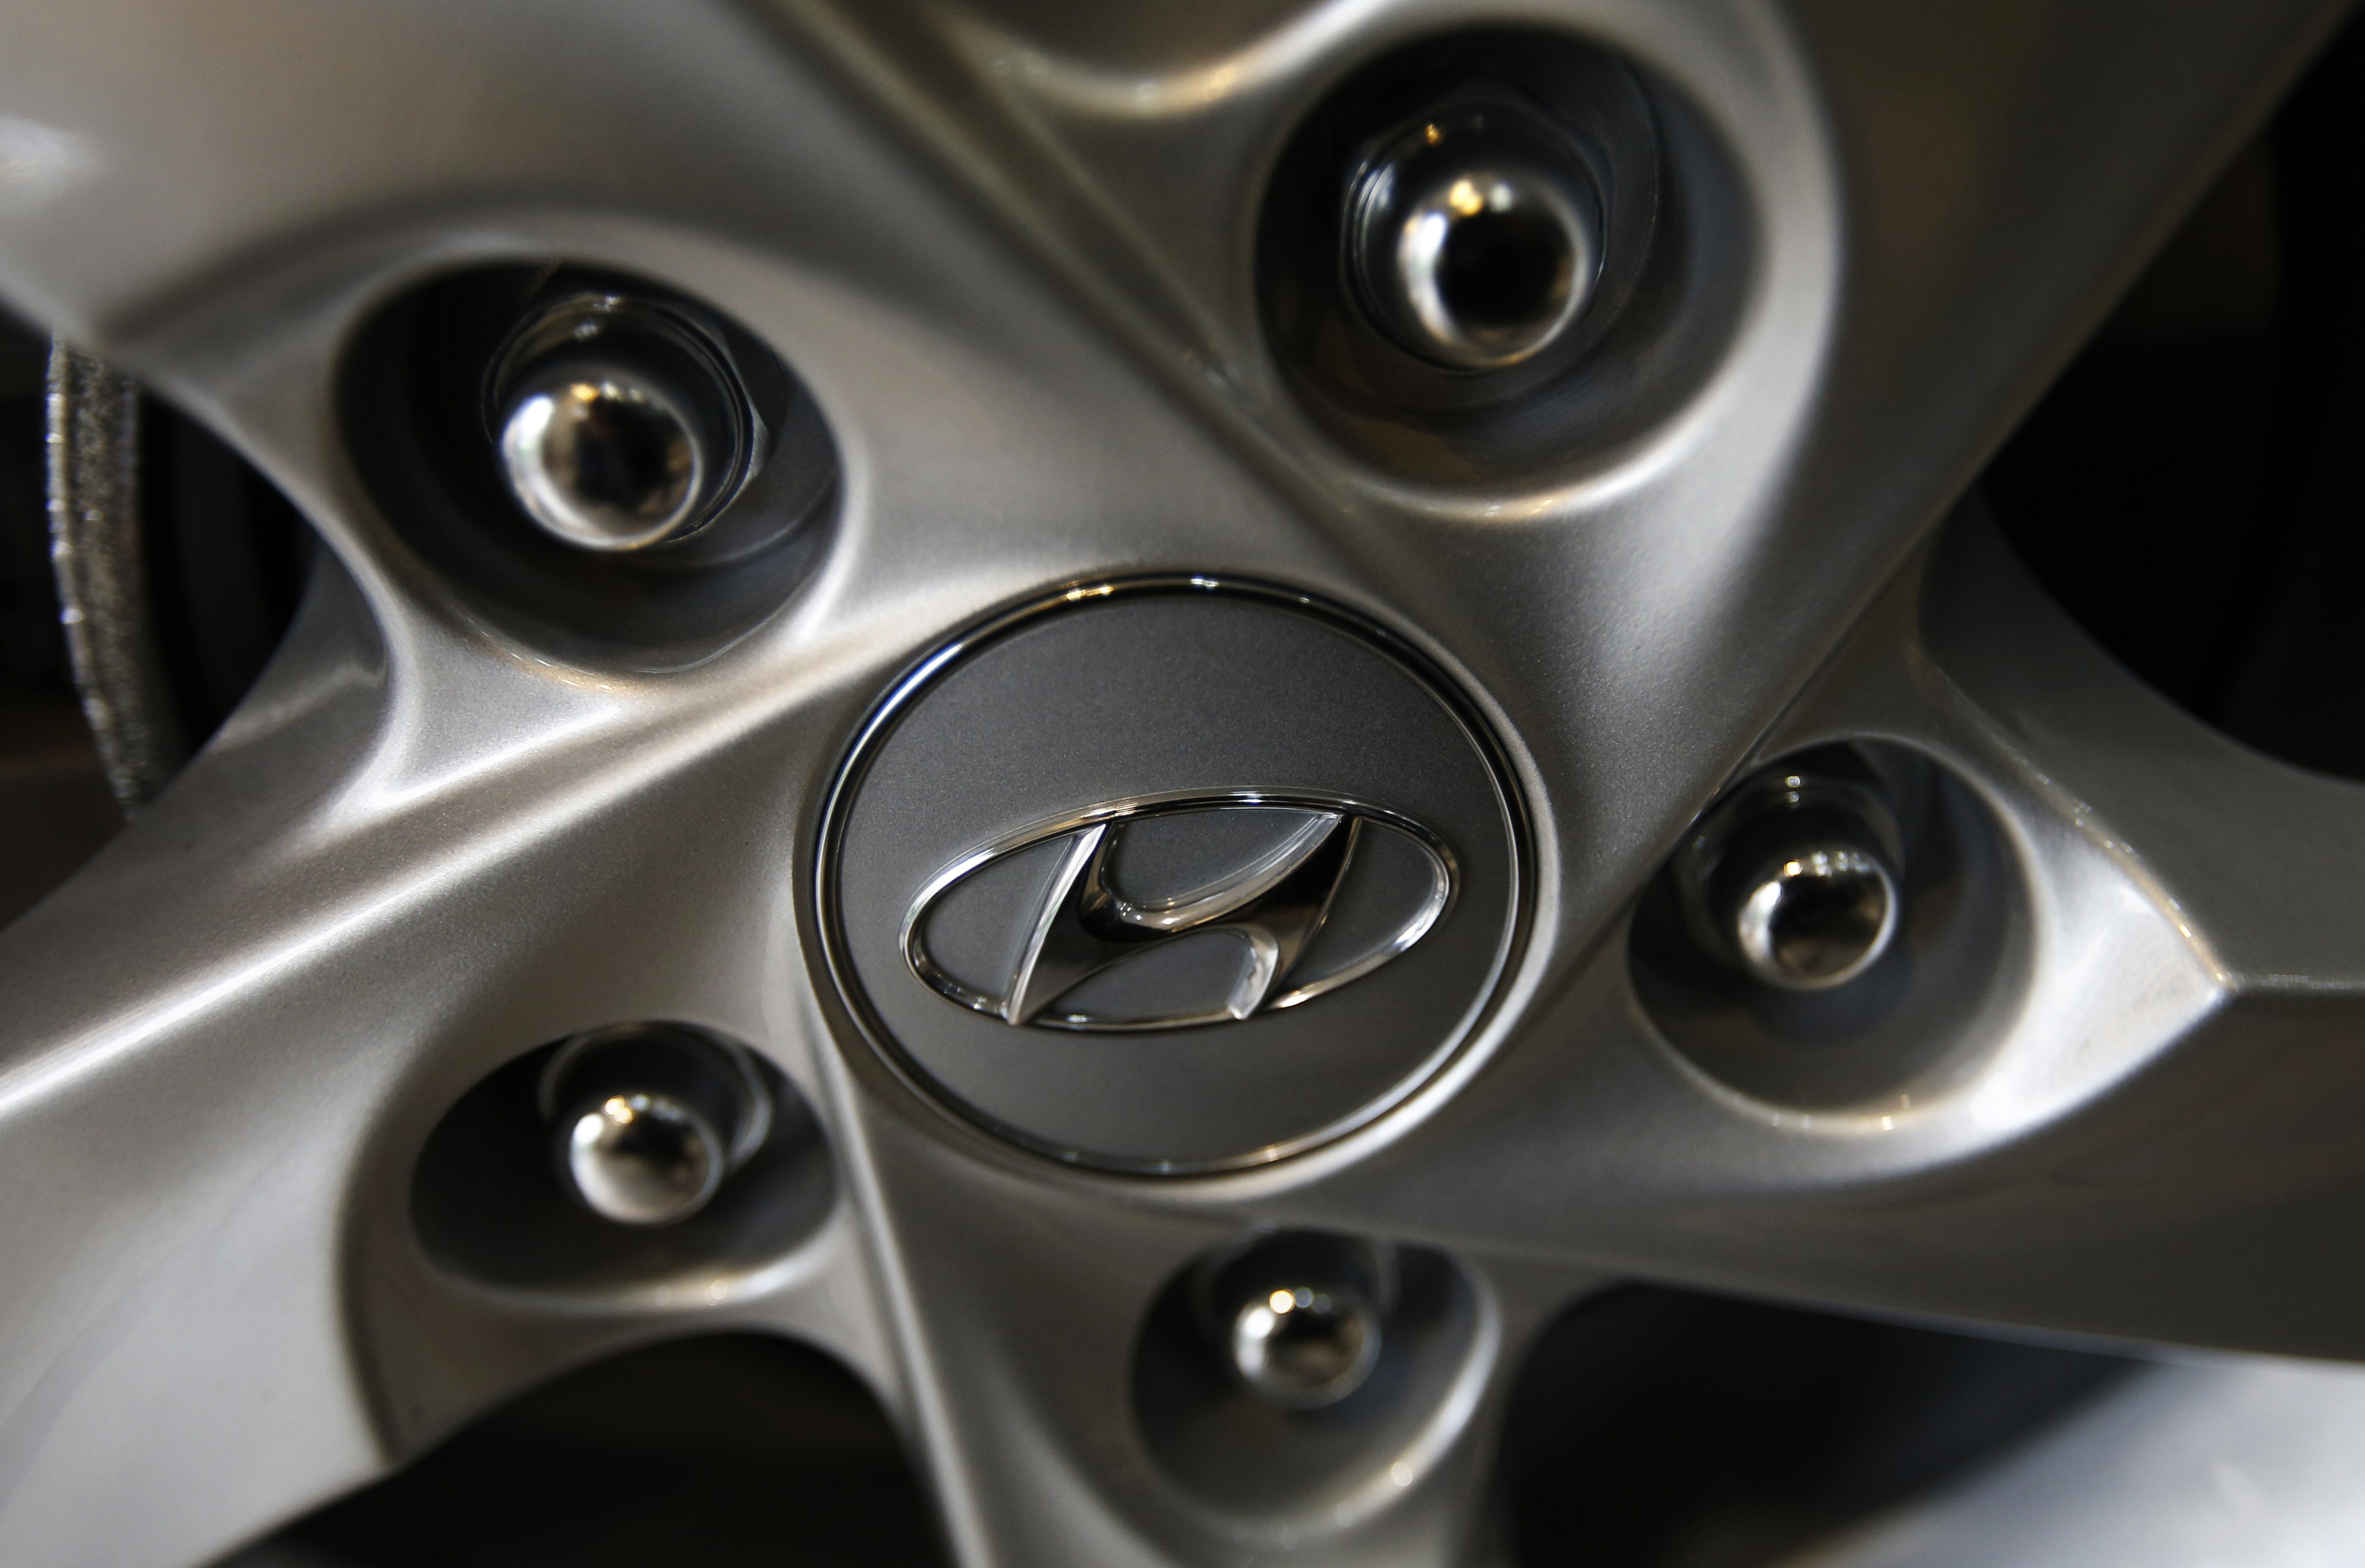 The logo of Hyundai Motor Co. is seen on a wheel of a car at a Hyundai dealership in Seoul